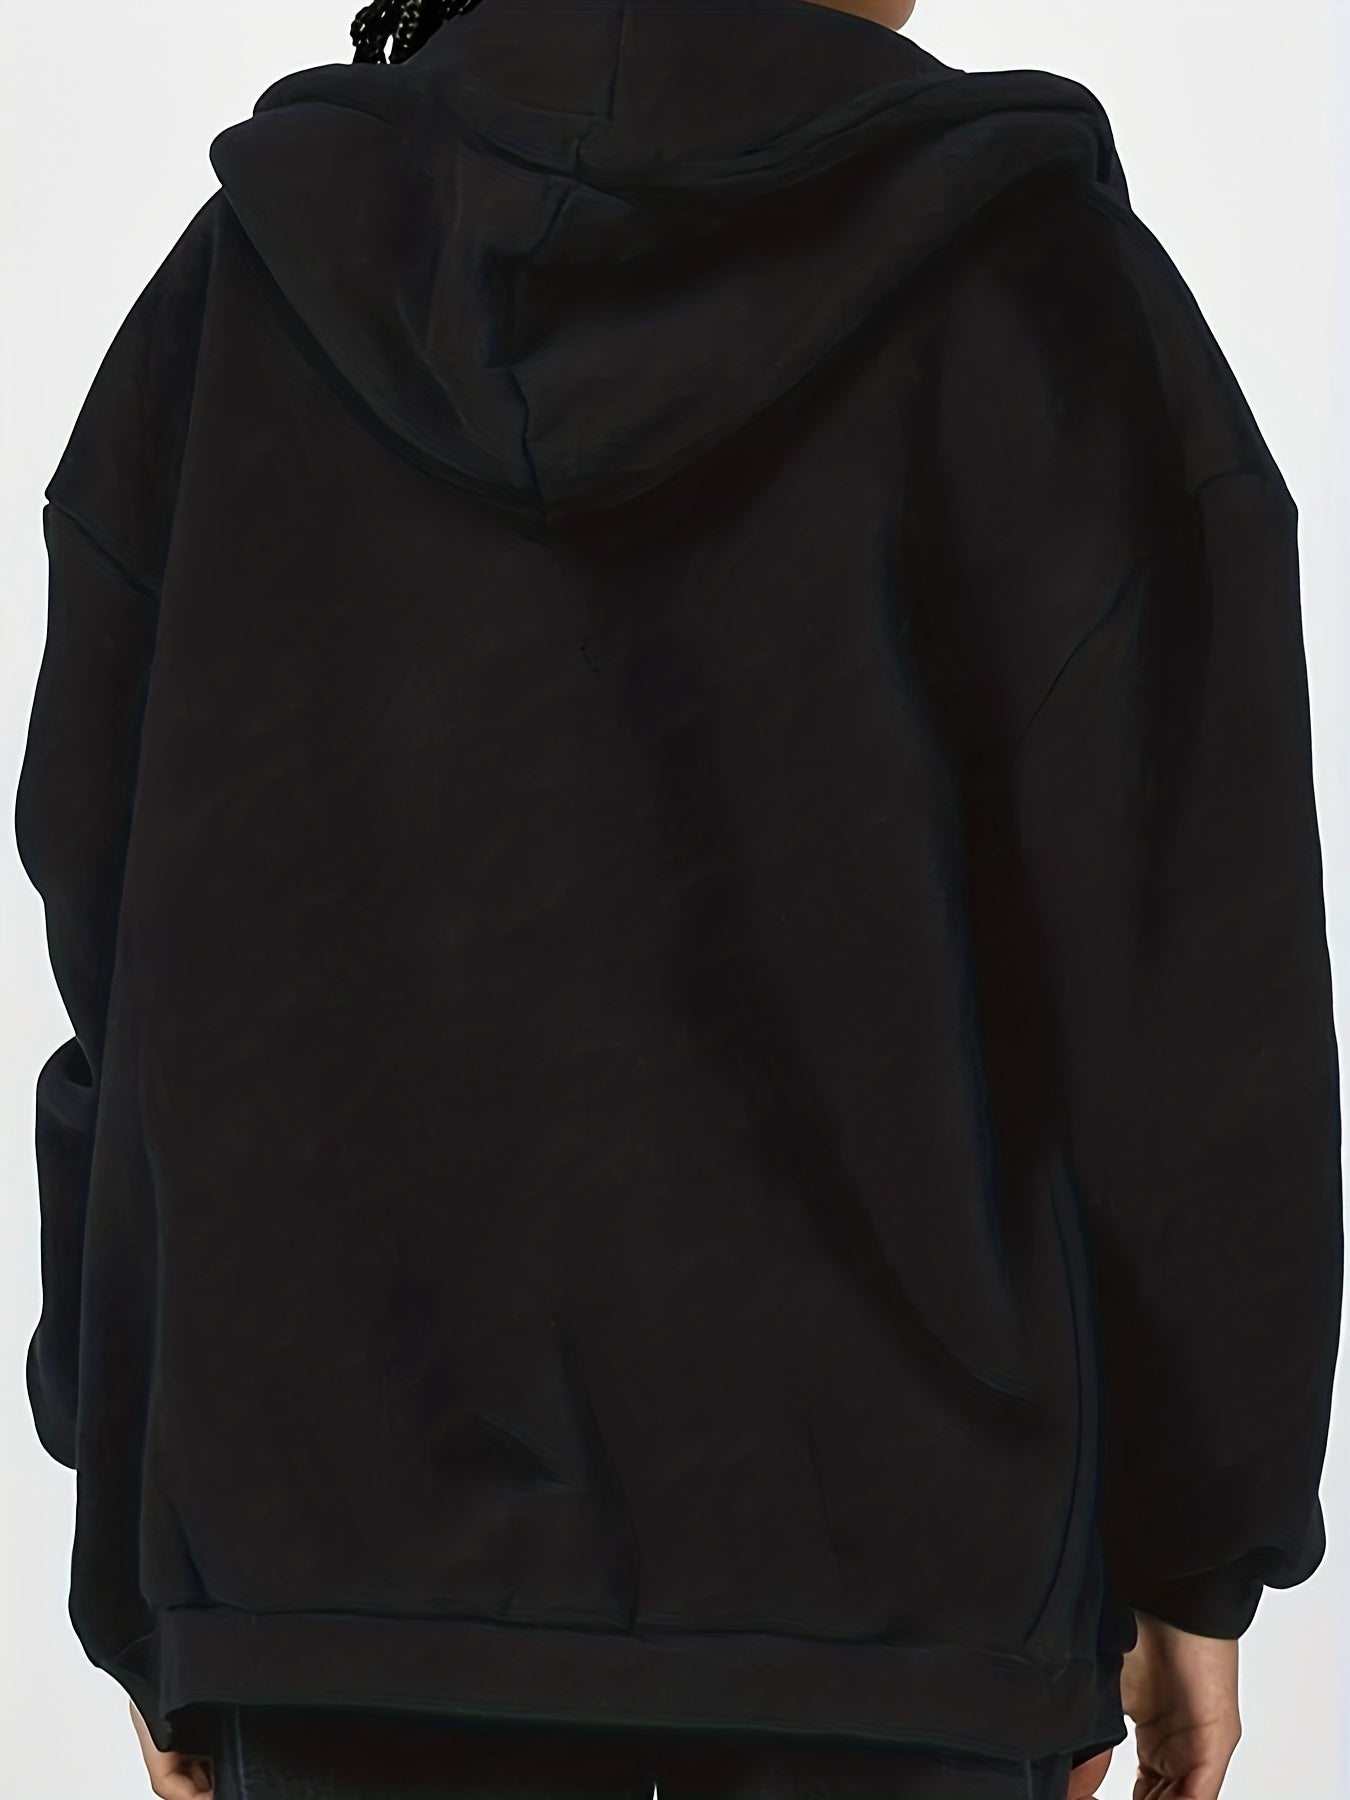 Plus Size Casual Sweatshirt, Women's Plus Solid Zip Up Long Sleeve Drawstring Hooded Sweatshirt Coat With Pockets